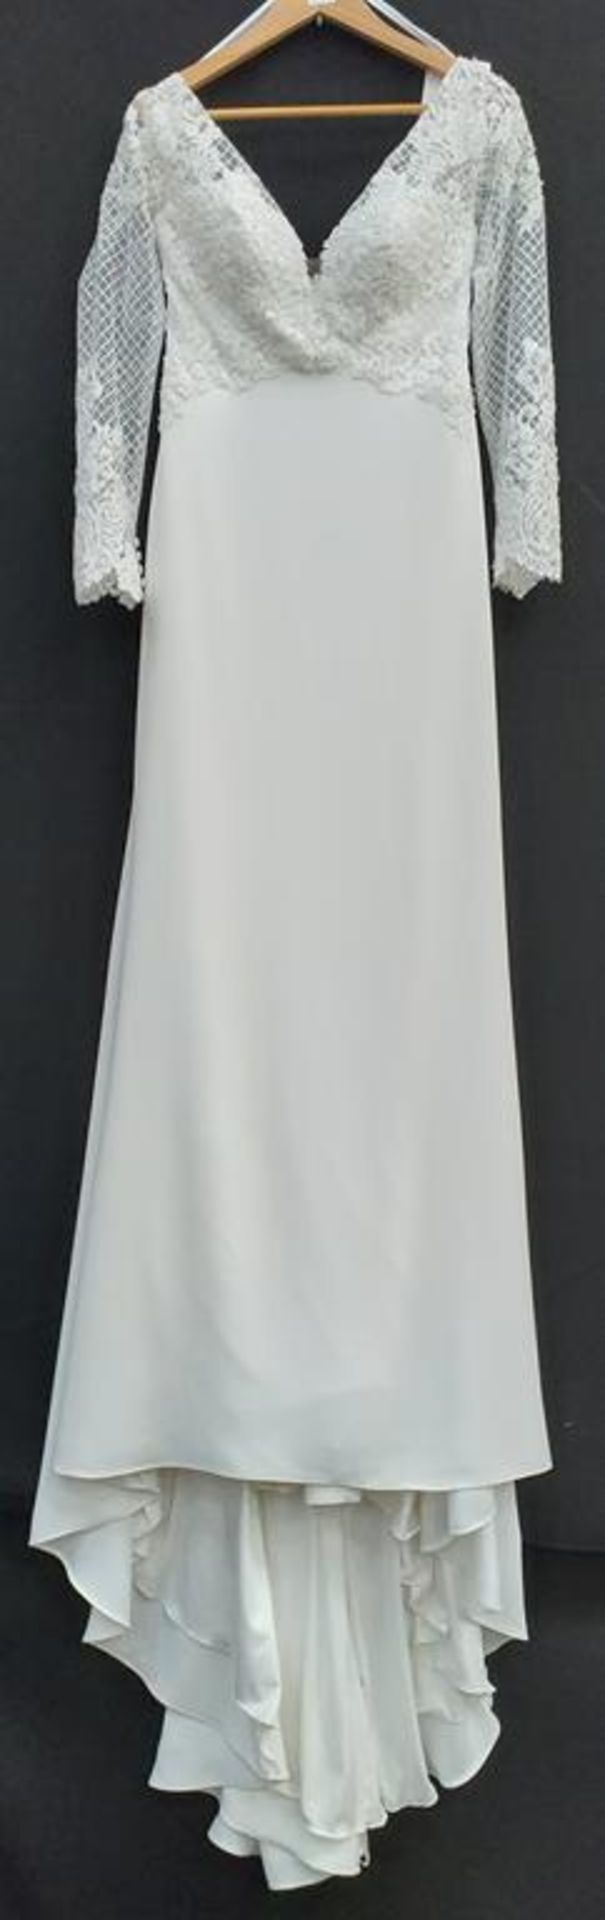 Modeca Styling Darlington wedding dress